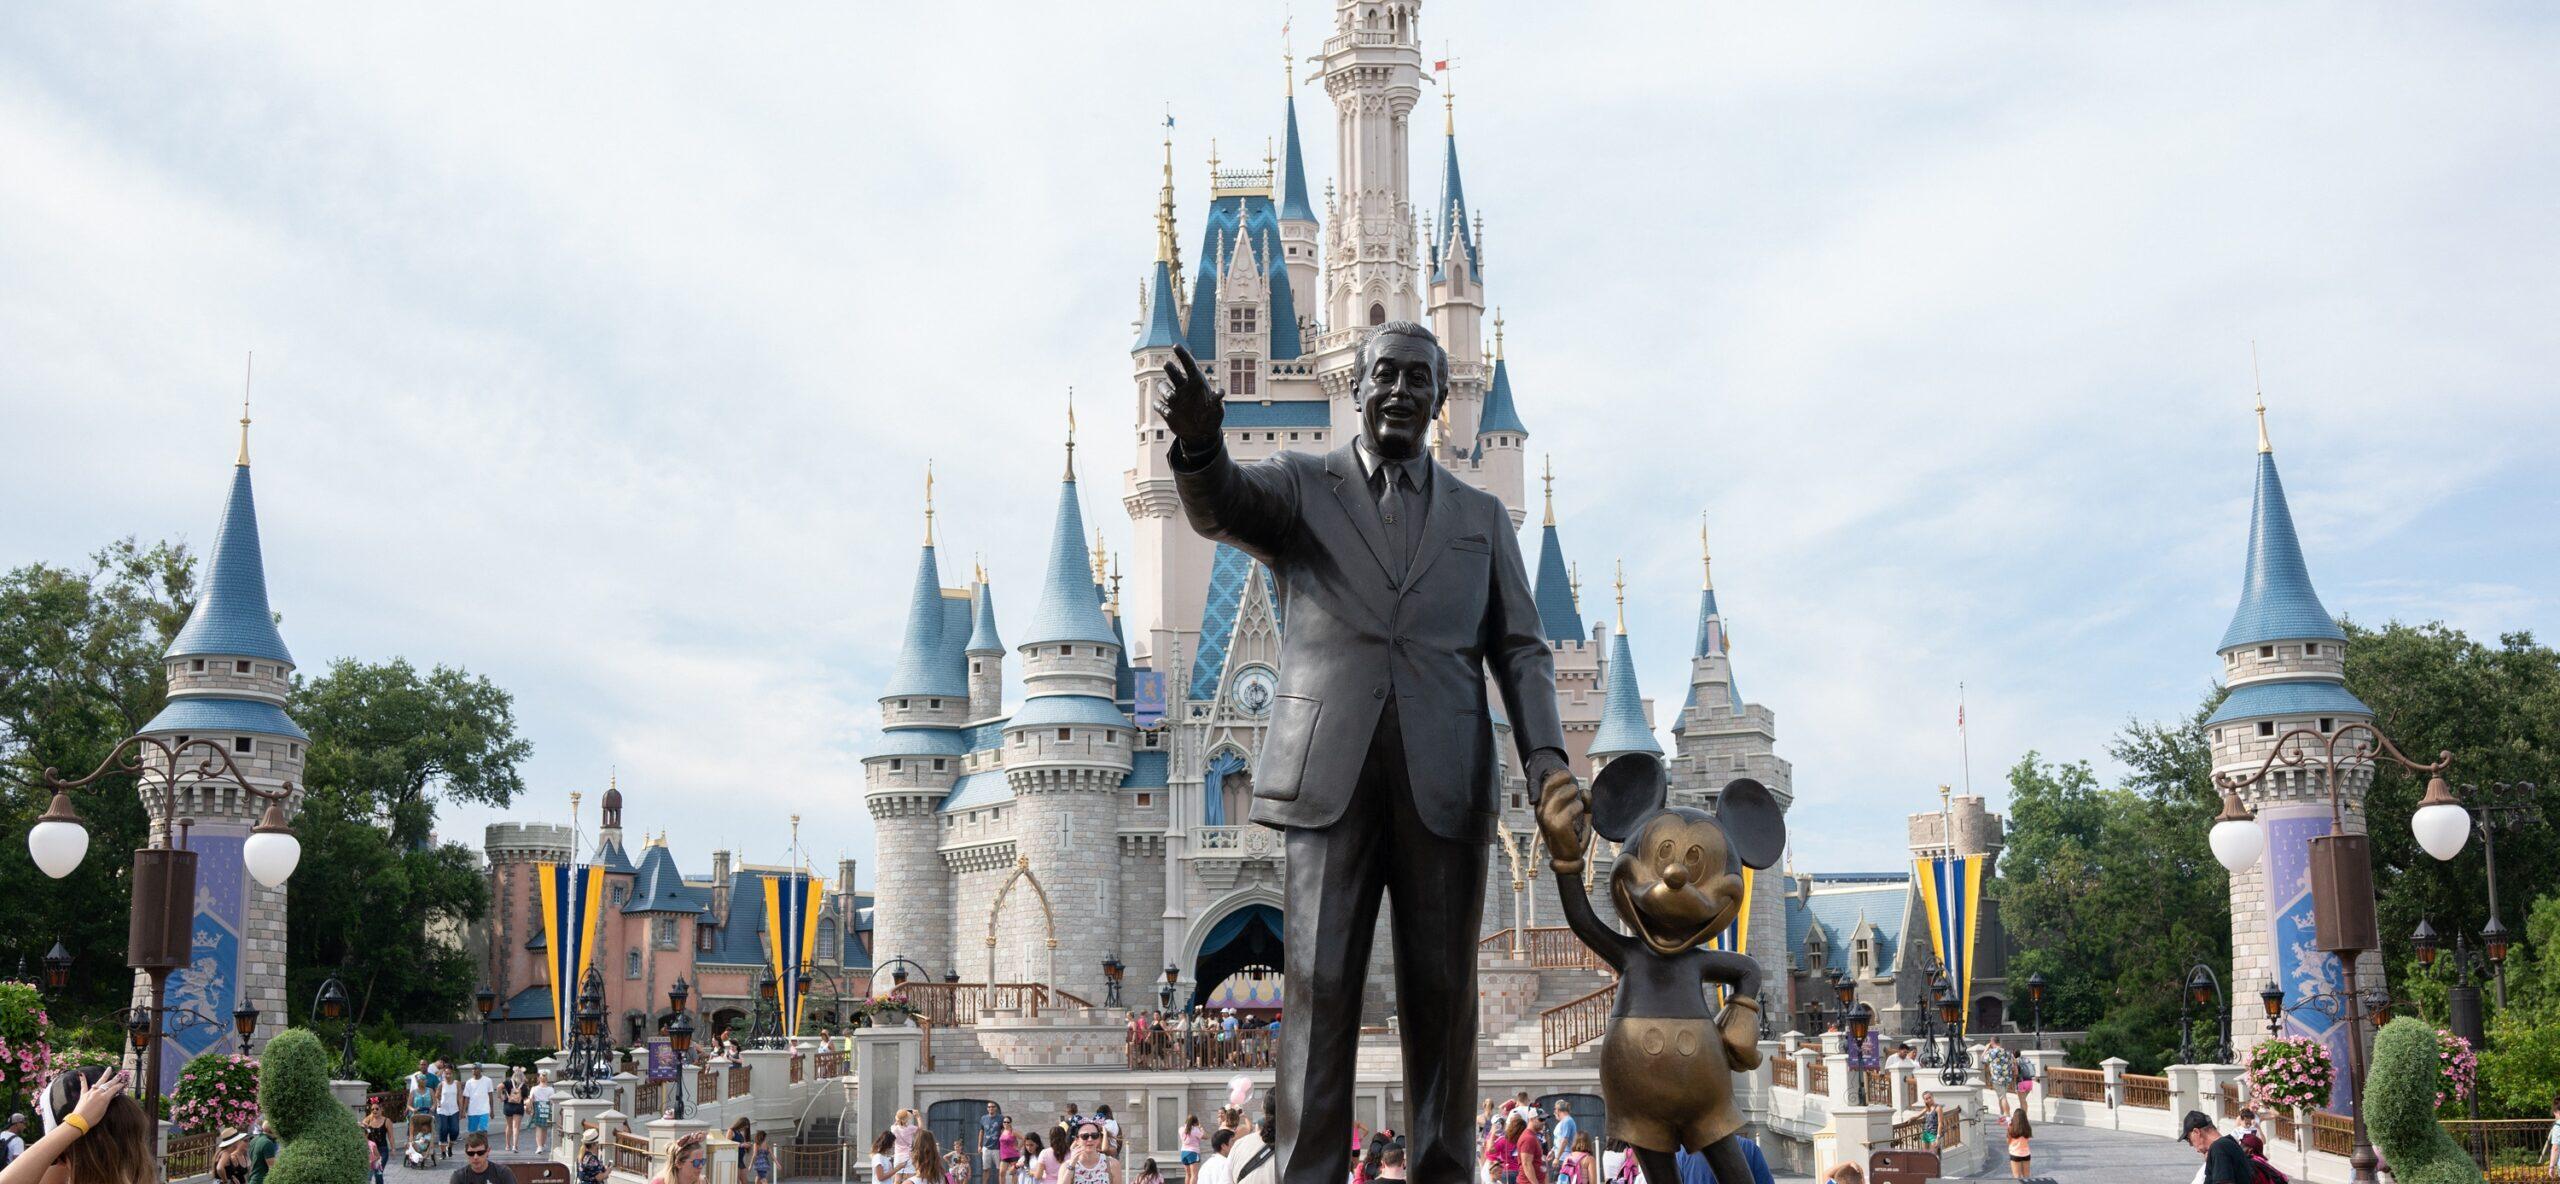 Cinderella Castle and Partners Statue at Walt Disney World